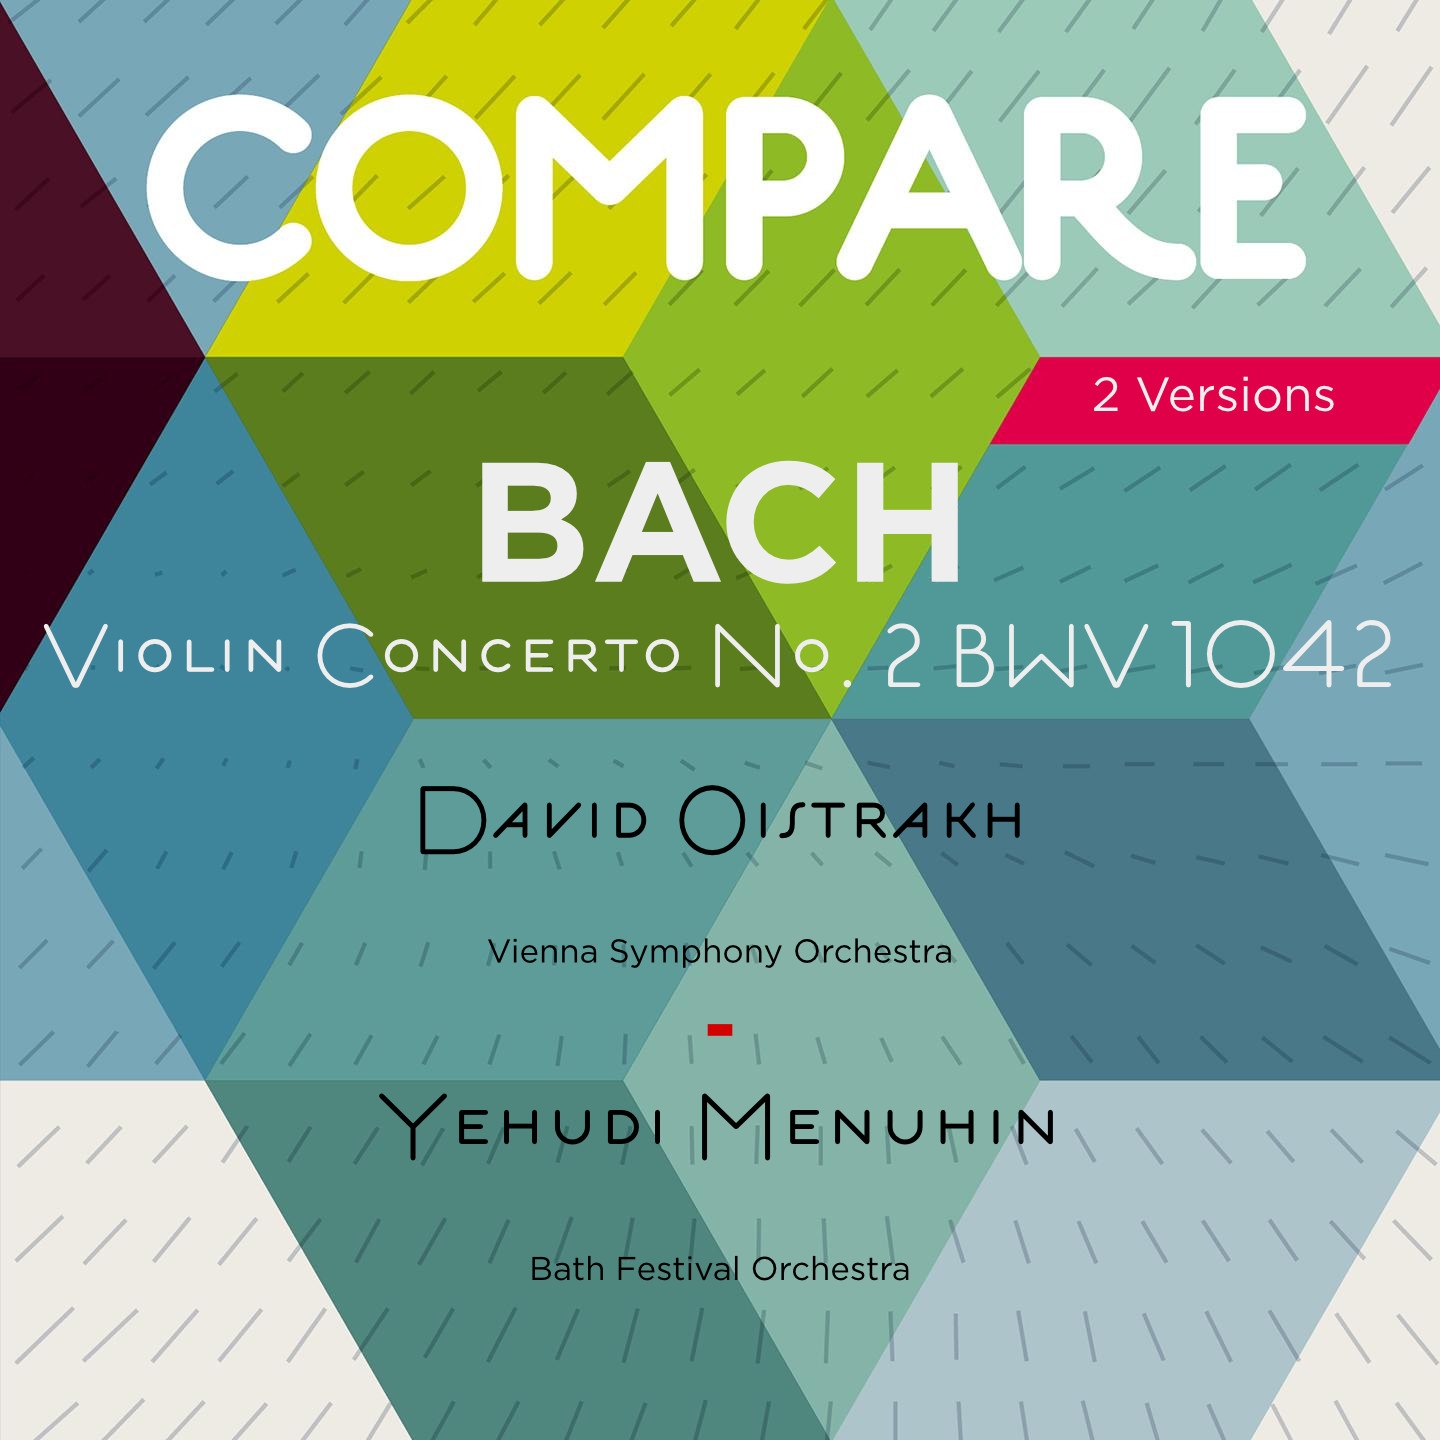 Violin Concerto No. 1 in E Major, BWV 1042: II. Adagio